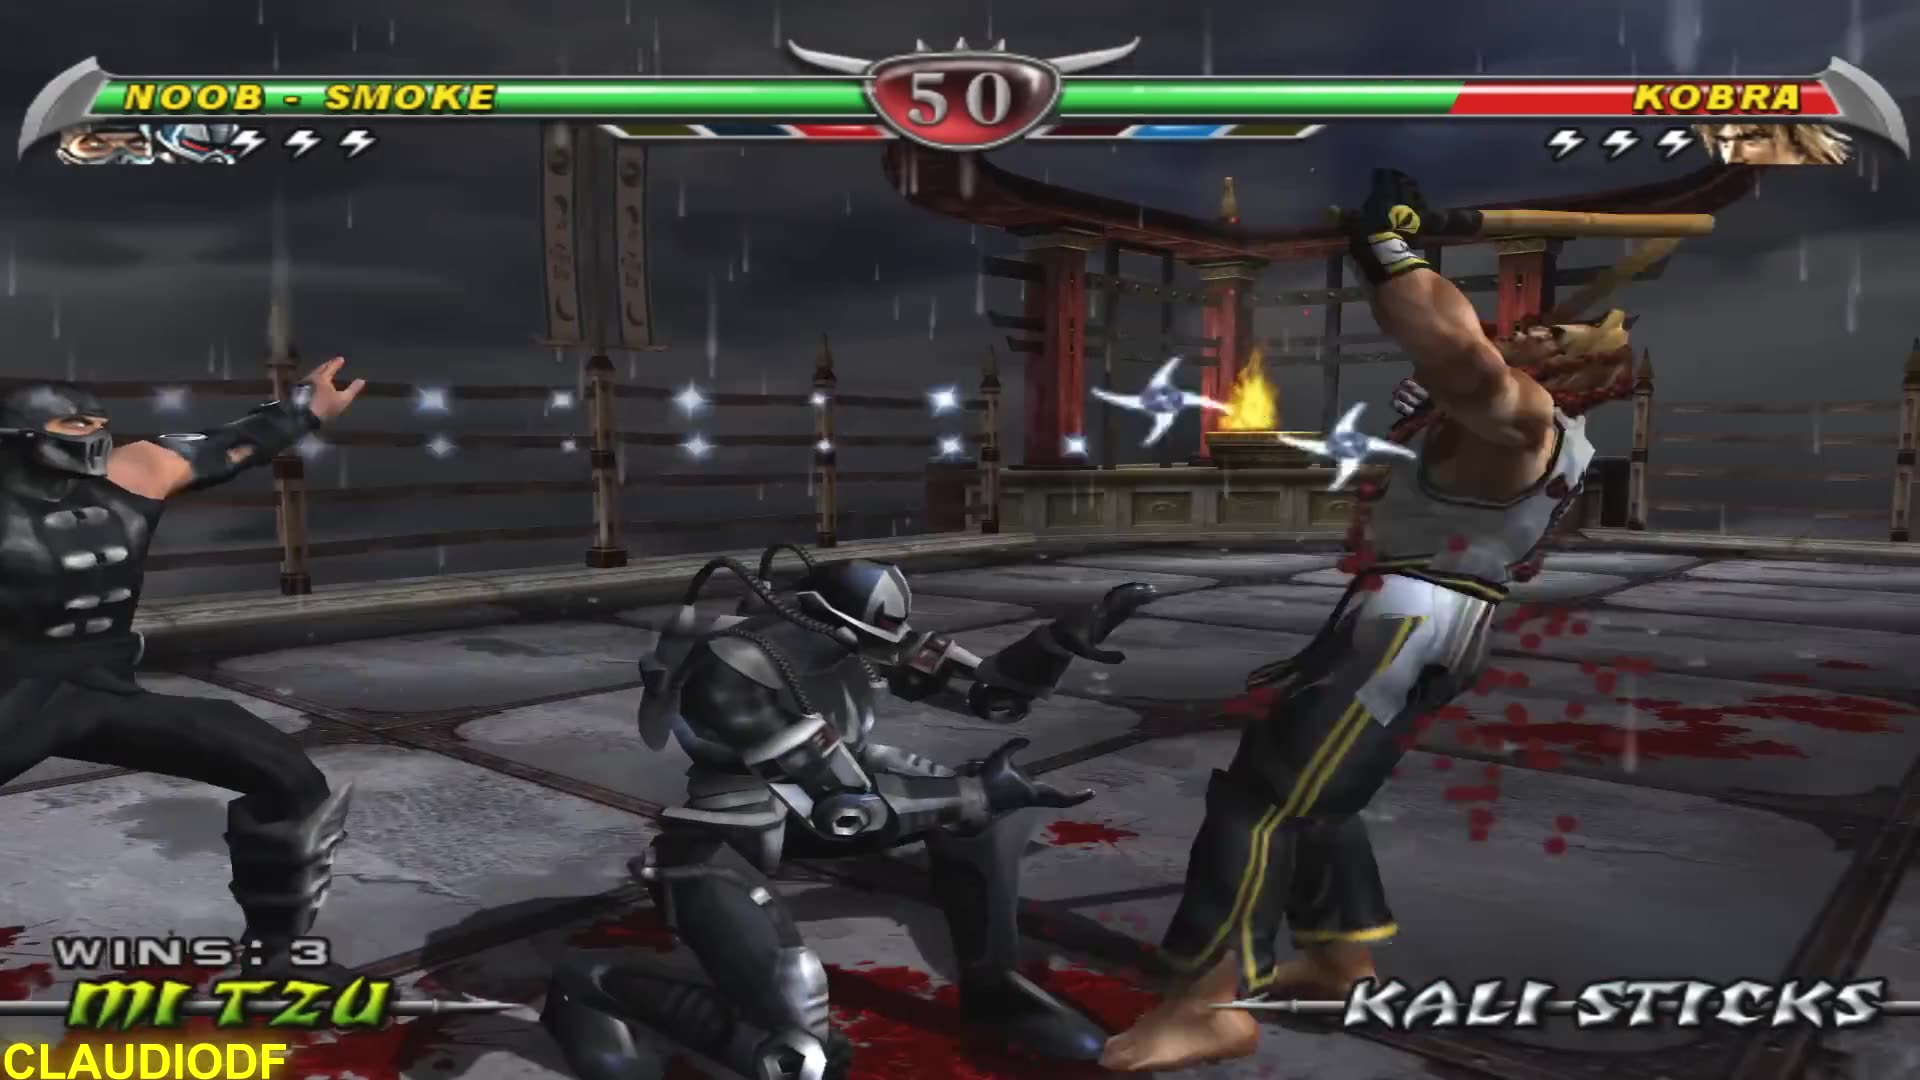 Mortal Kombat Deception - Noob/Smoke Playthrough on PS2